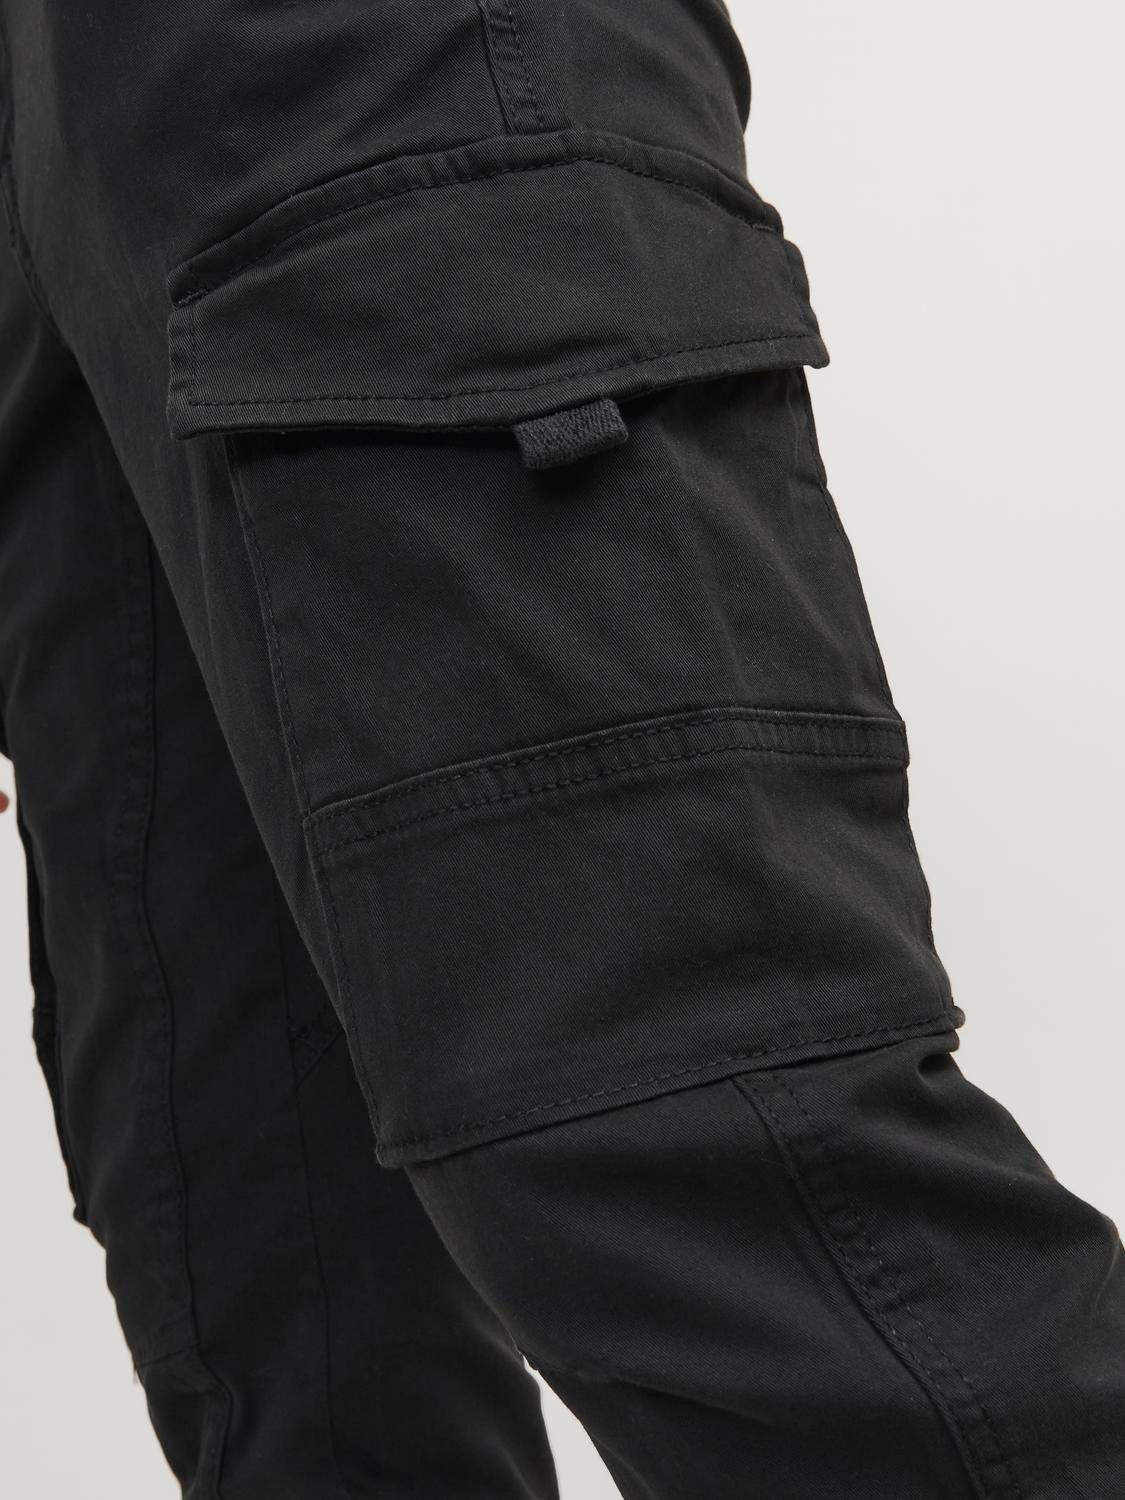 Pantalon cargo Tapered Fit Noir en coton Jack & Jones - Pantalon